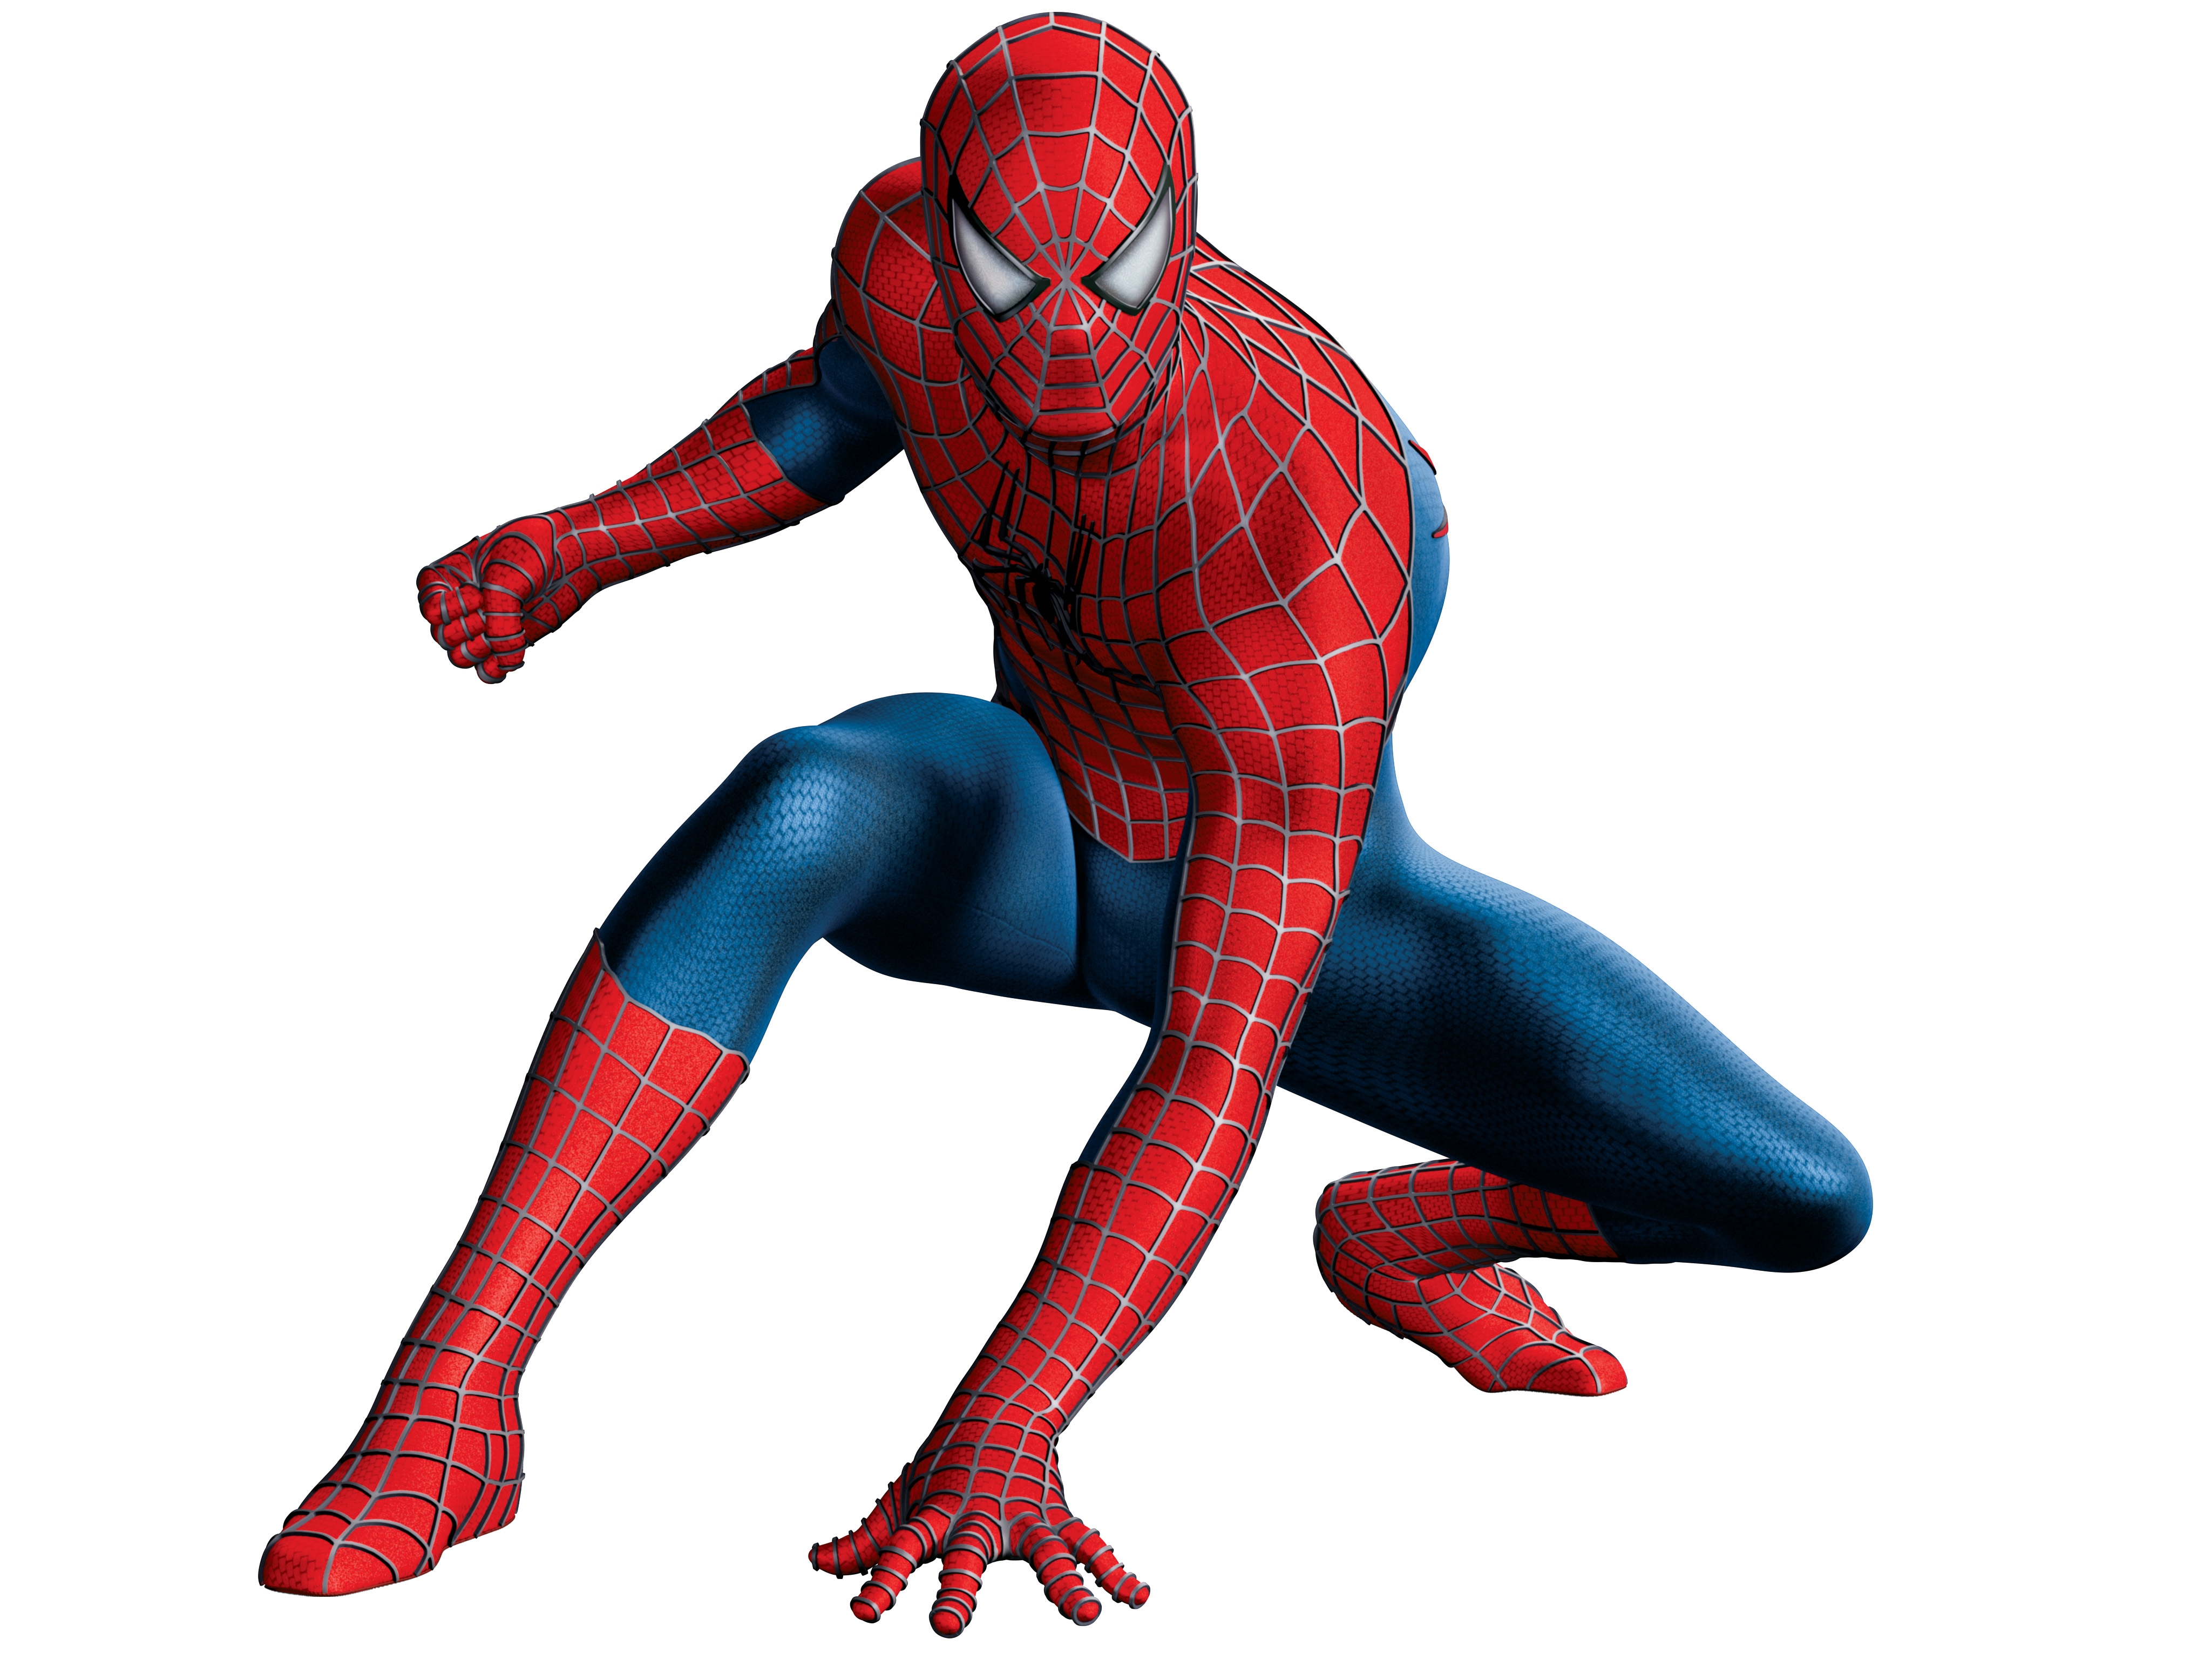 Spiderman Hd Image Wallpaper Free - Spider Man White Background - HD Wallpaper 